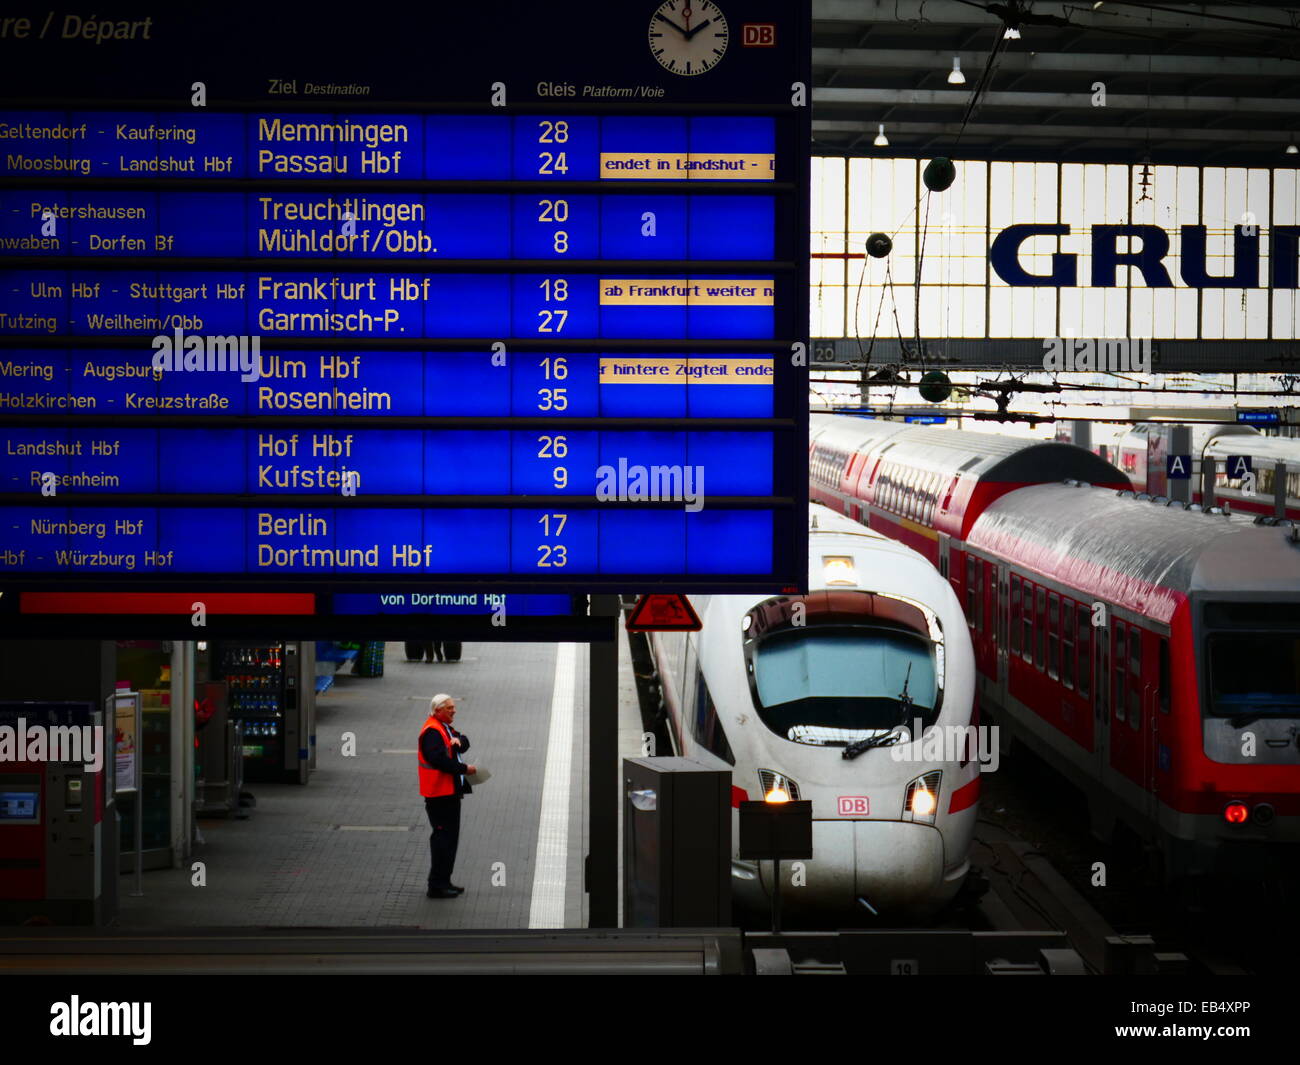 Germany Munich German Station Table and train on platform Photo - Alamy